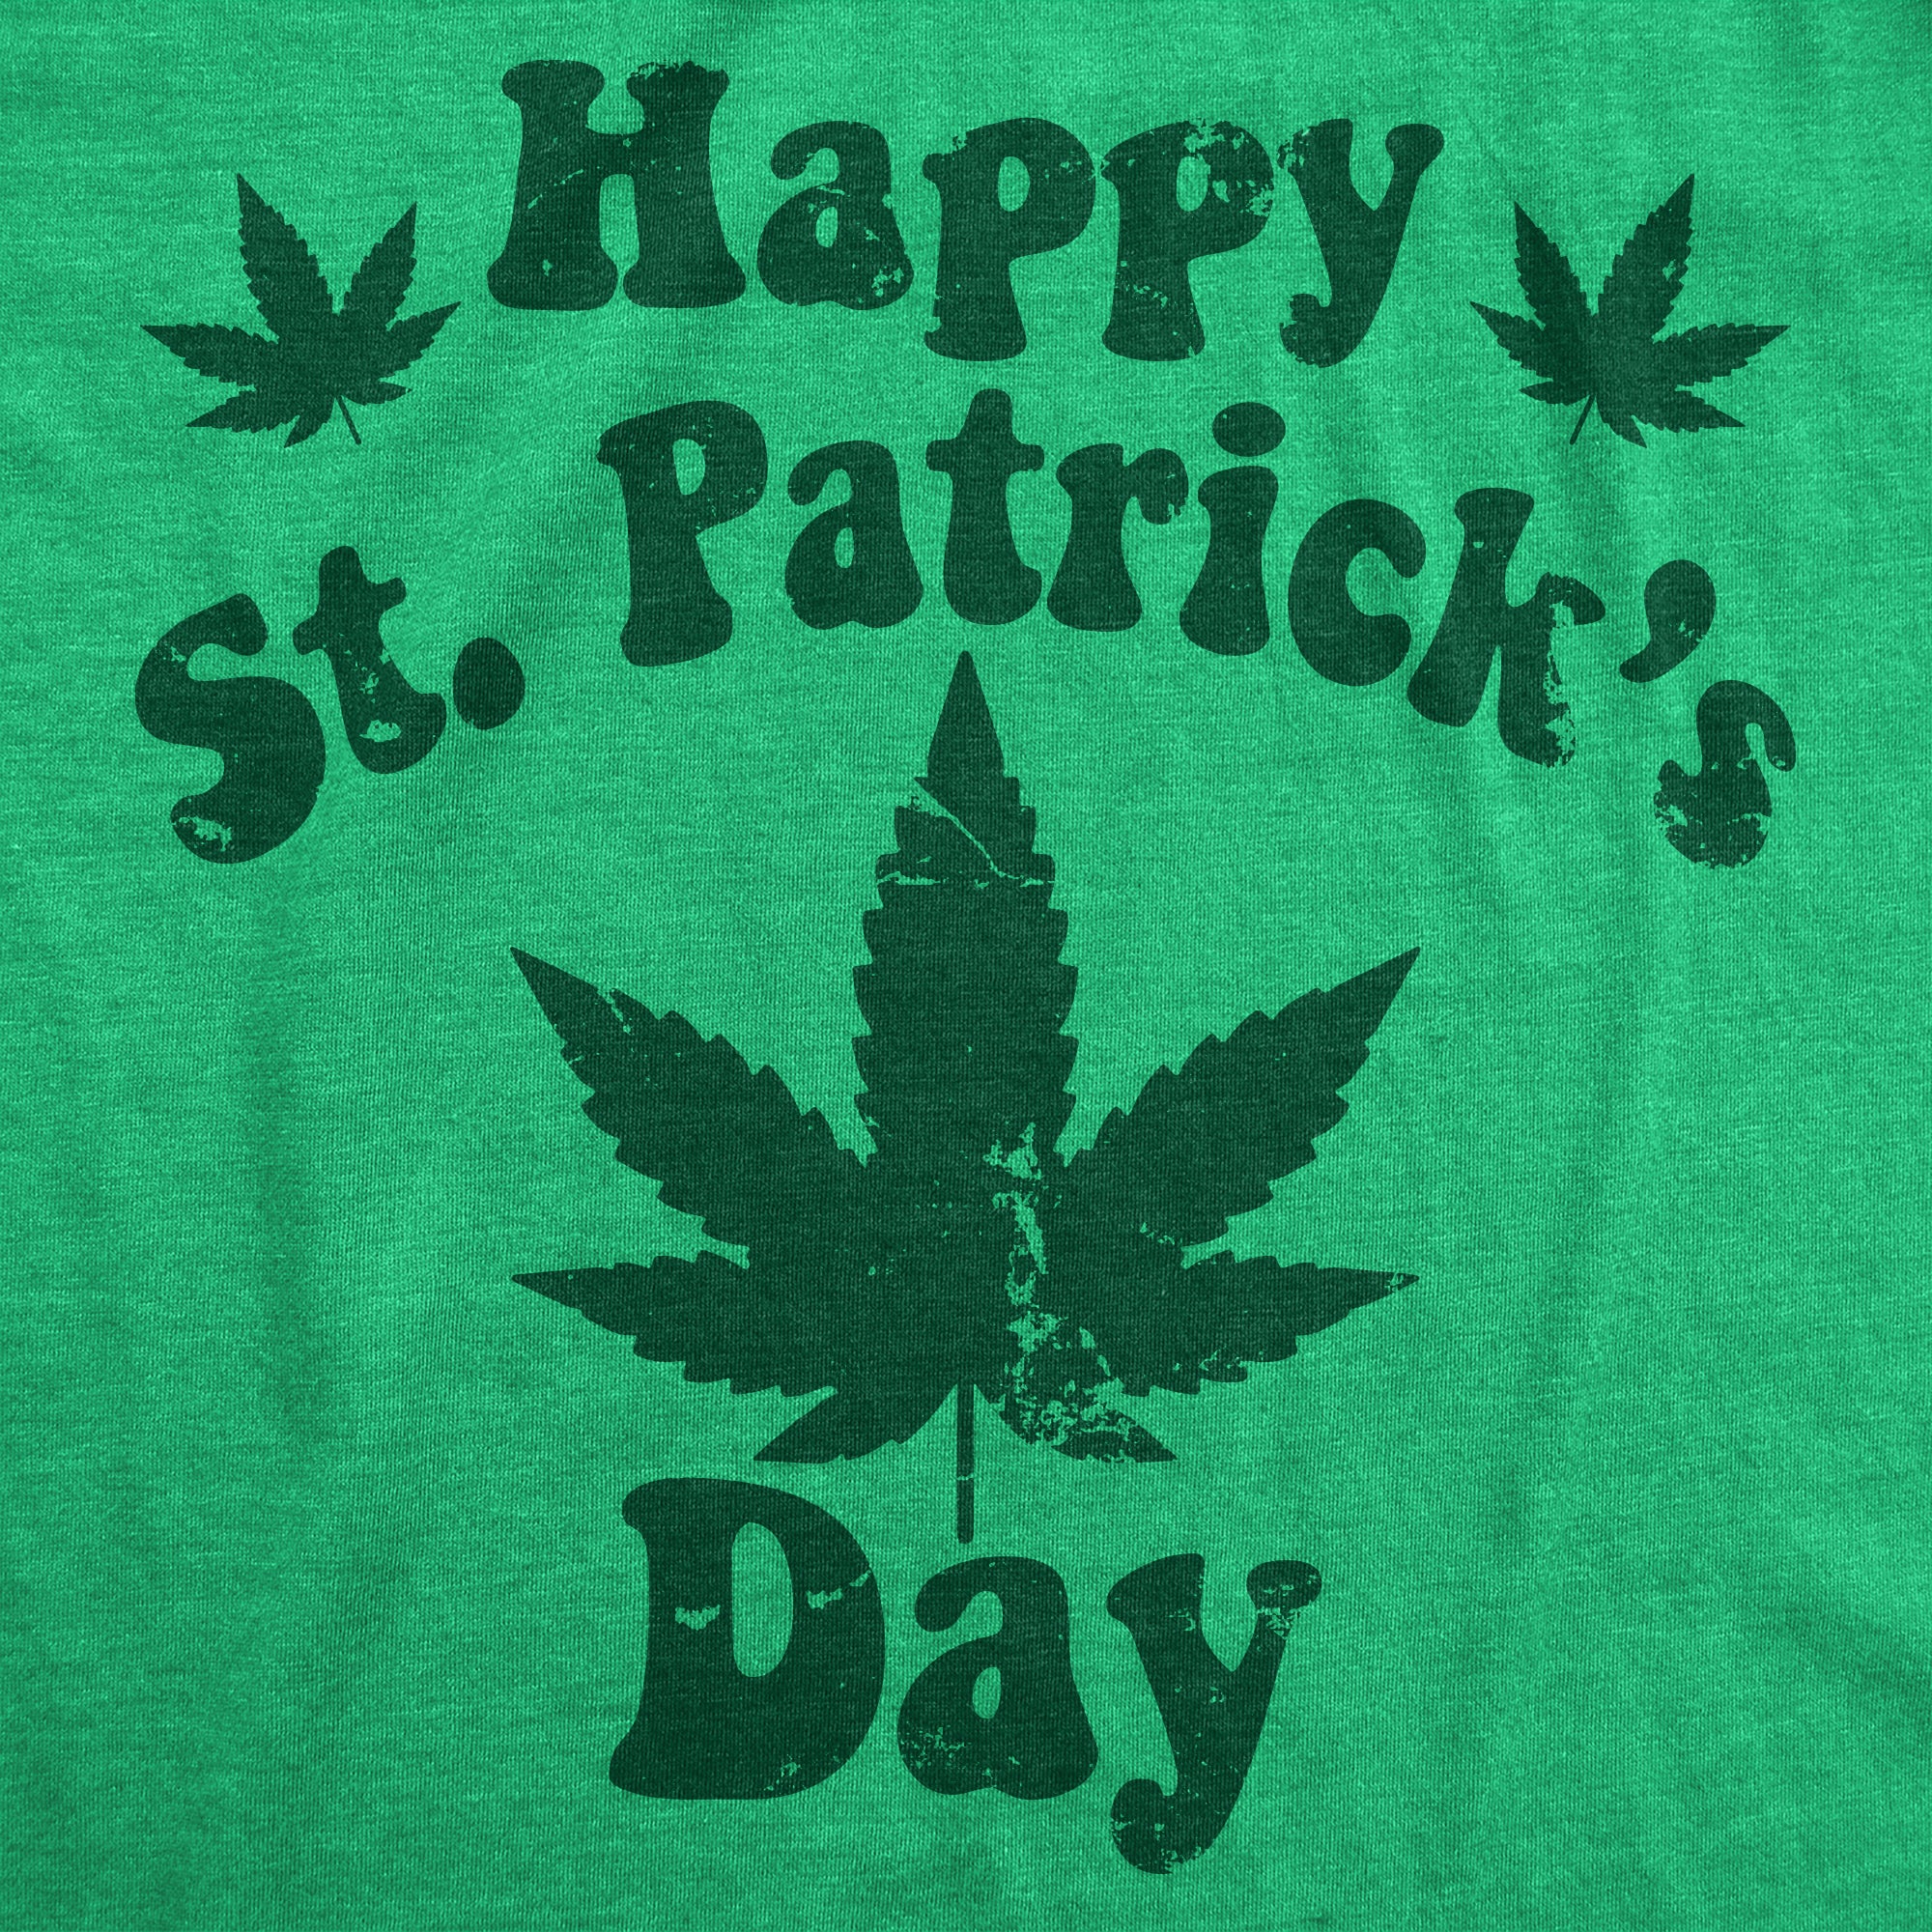 Funny Heather Green - Happy St. Patricks Day Happy Saint Patricks Day Weed Womens T Shirt Nerdy Saint Patricks Day 420 Tee